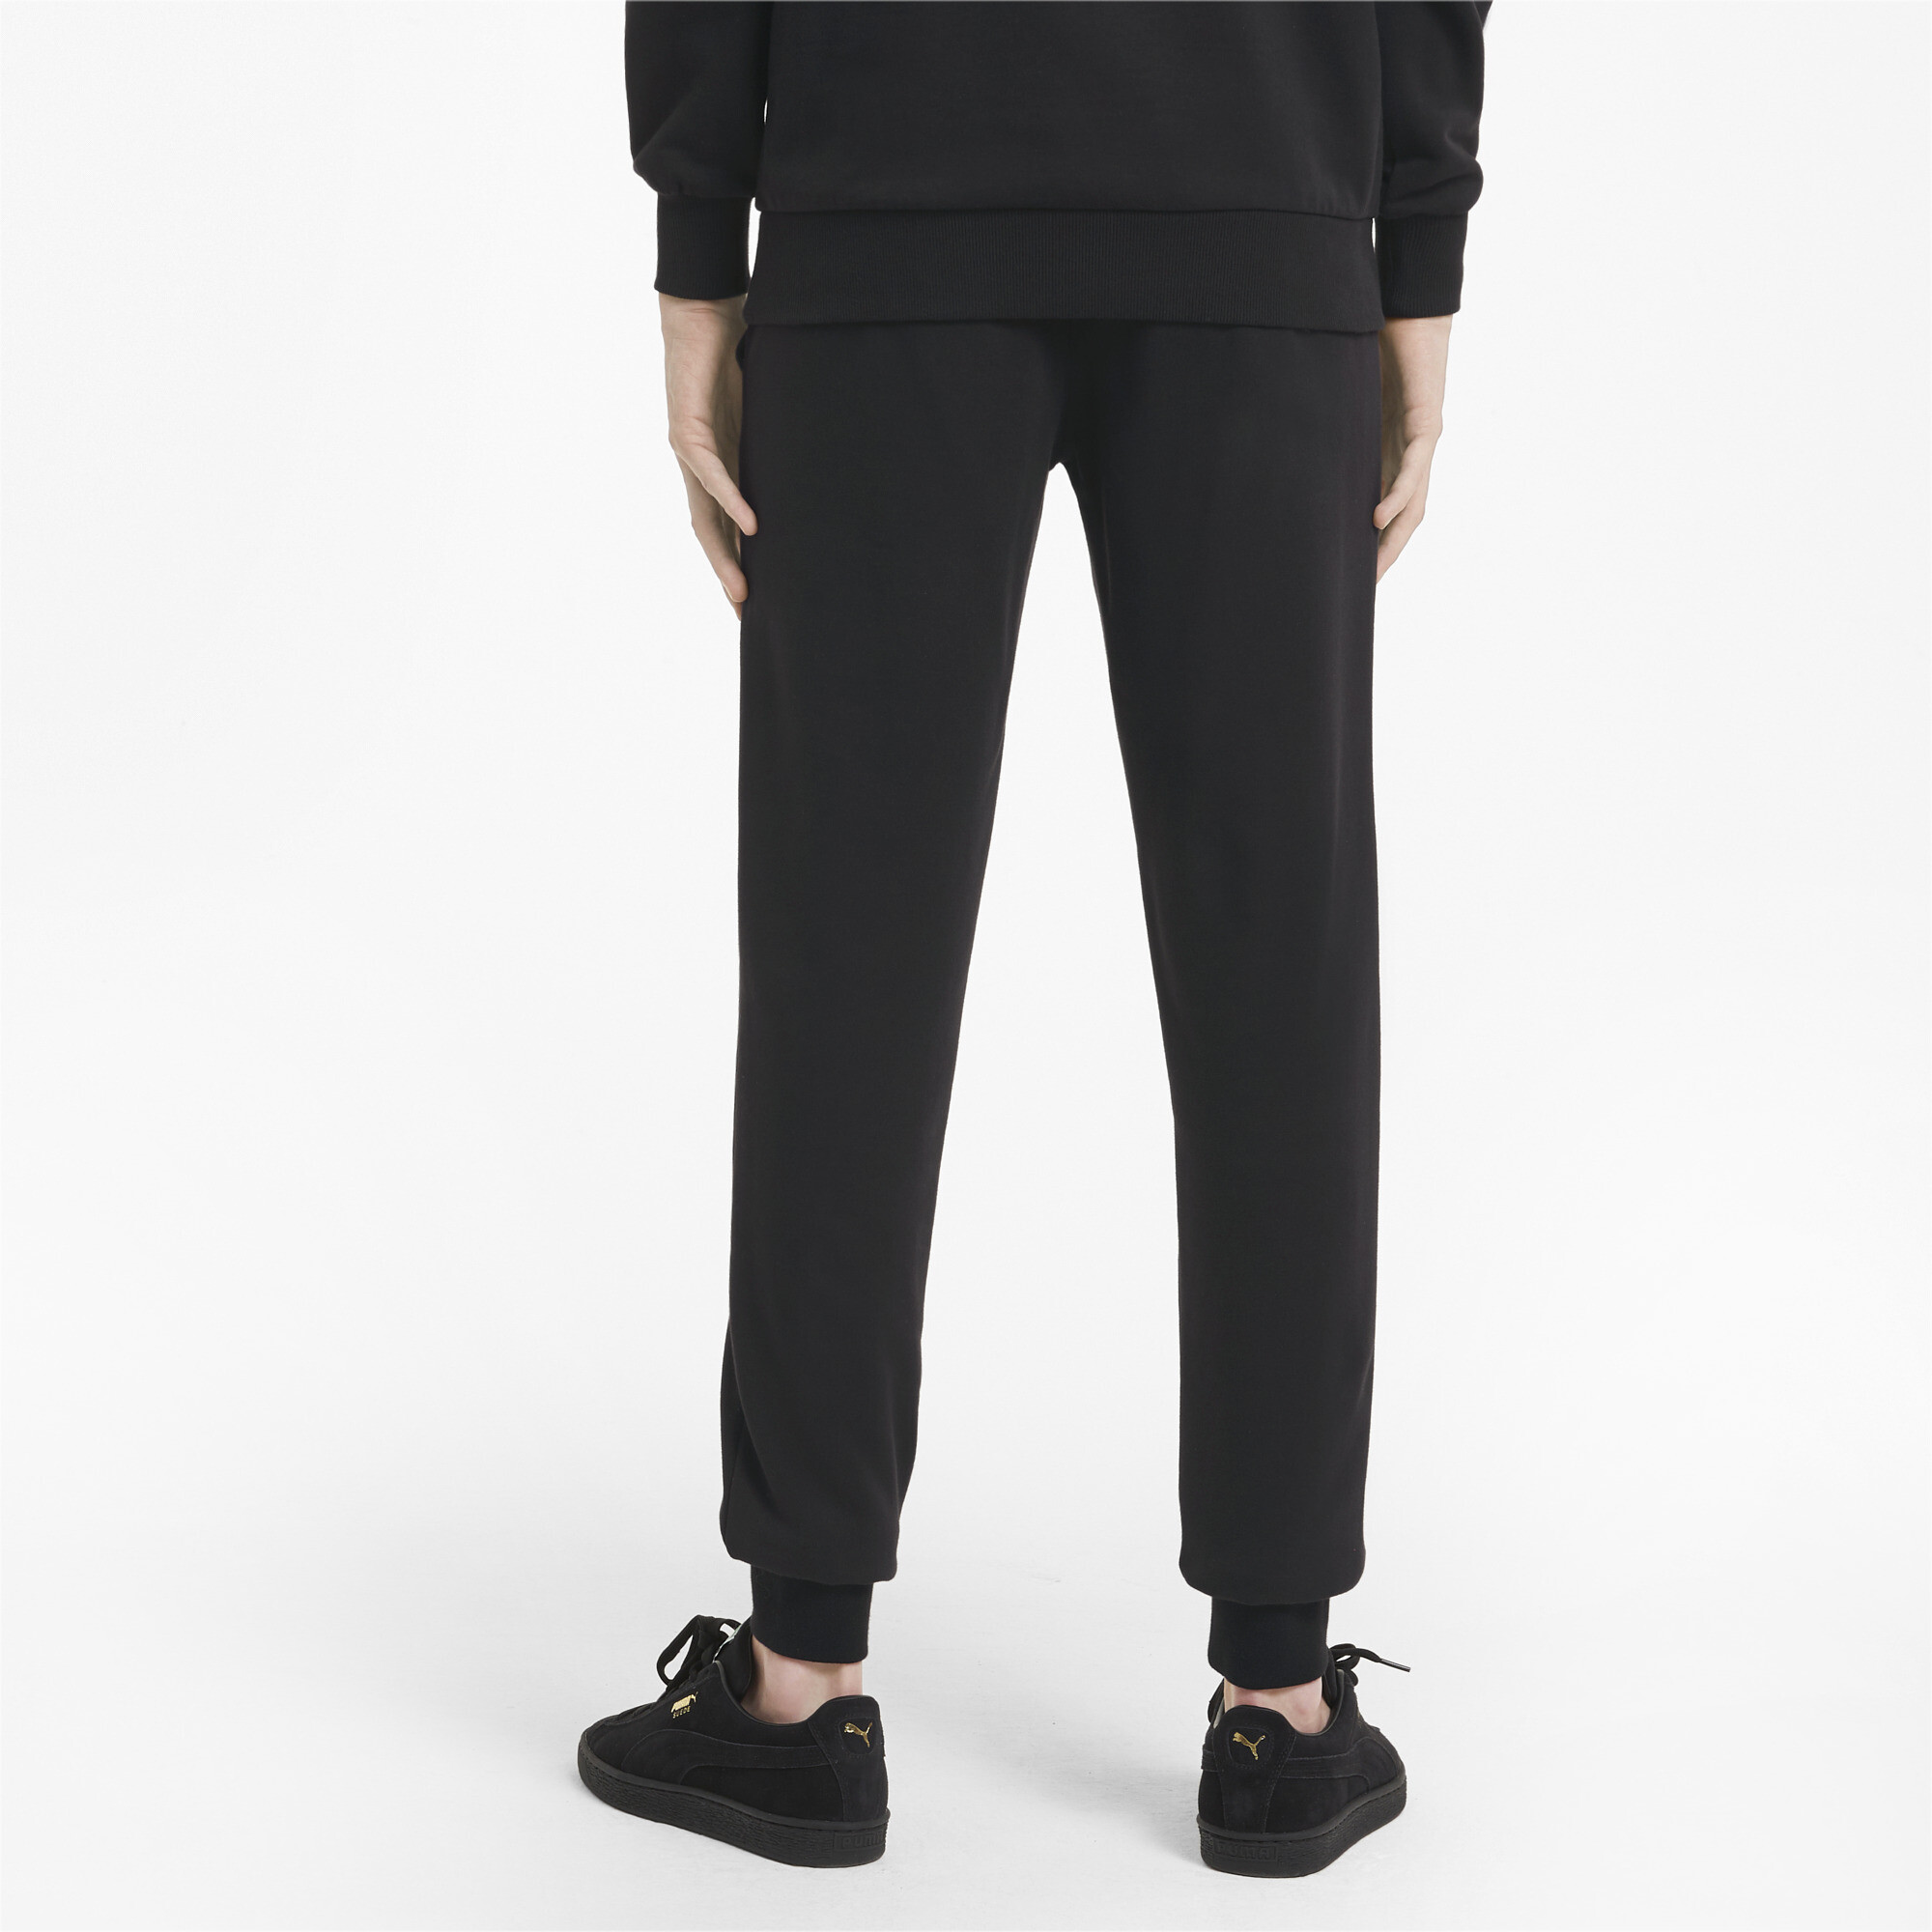 Men's Puma Classics Cuffed's Sweatpants, Black, Size M, Clothing